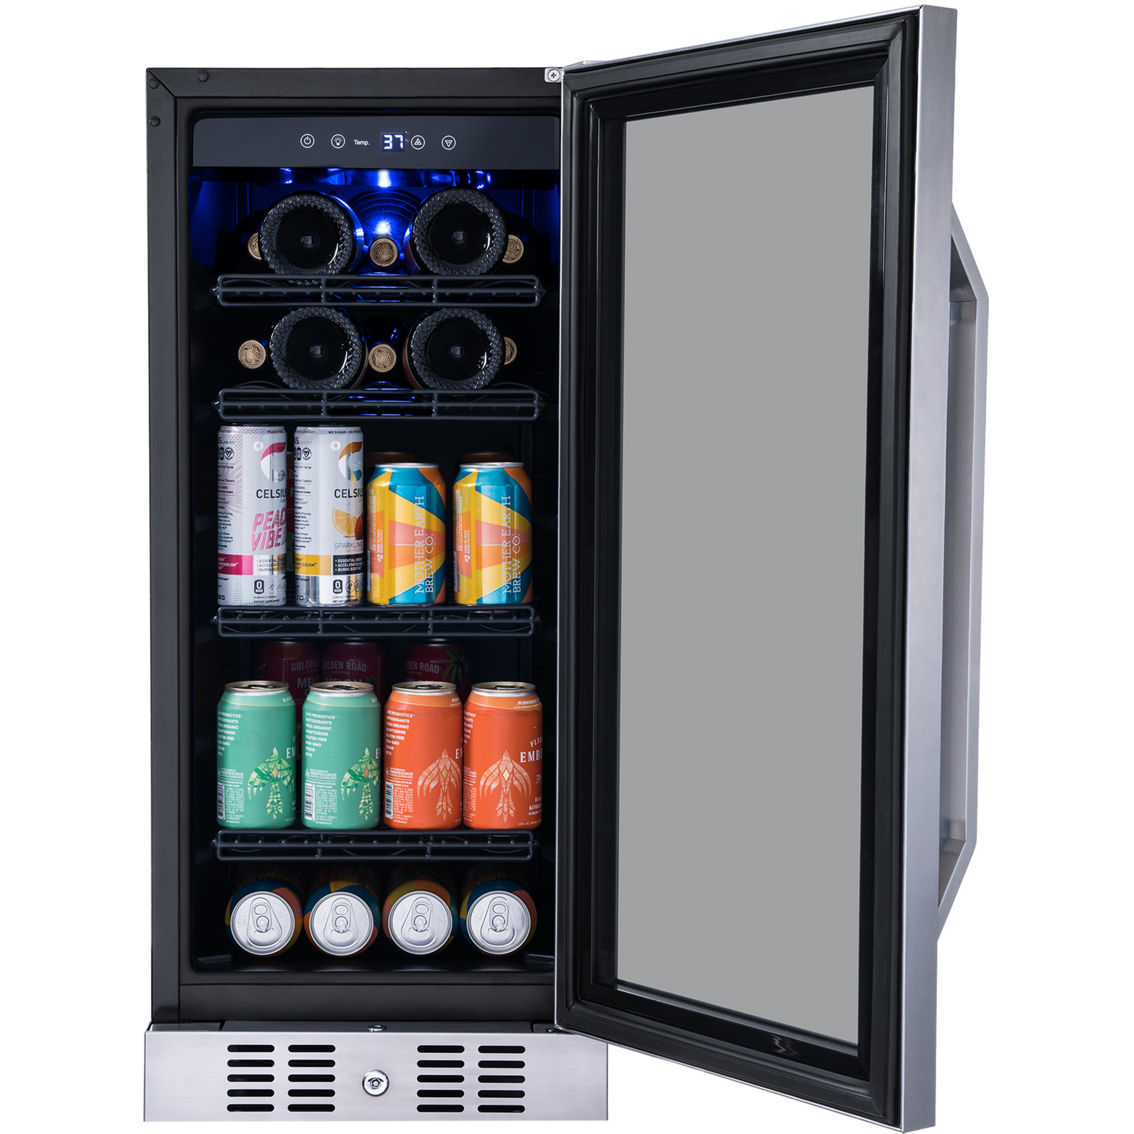 Newair 15 in. FlipShelf Wine and Beverage Refrigerator - Image 3 of 10